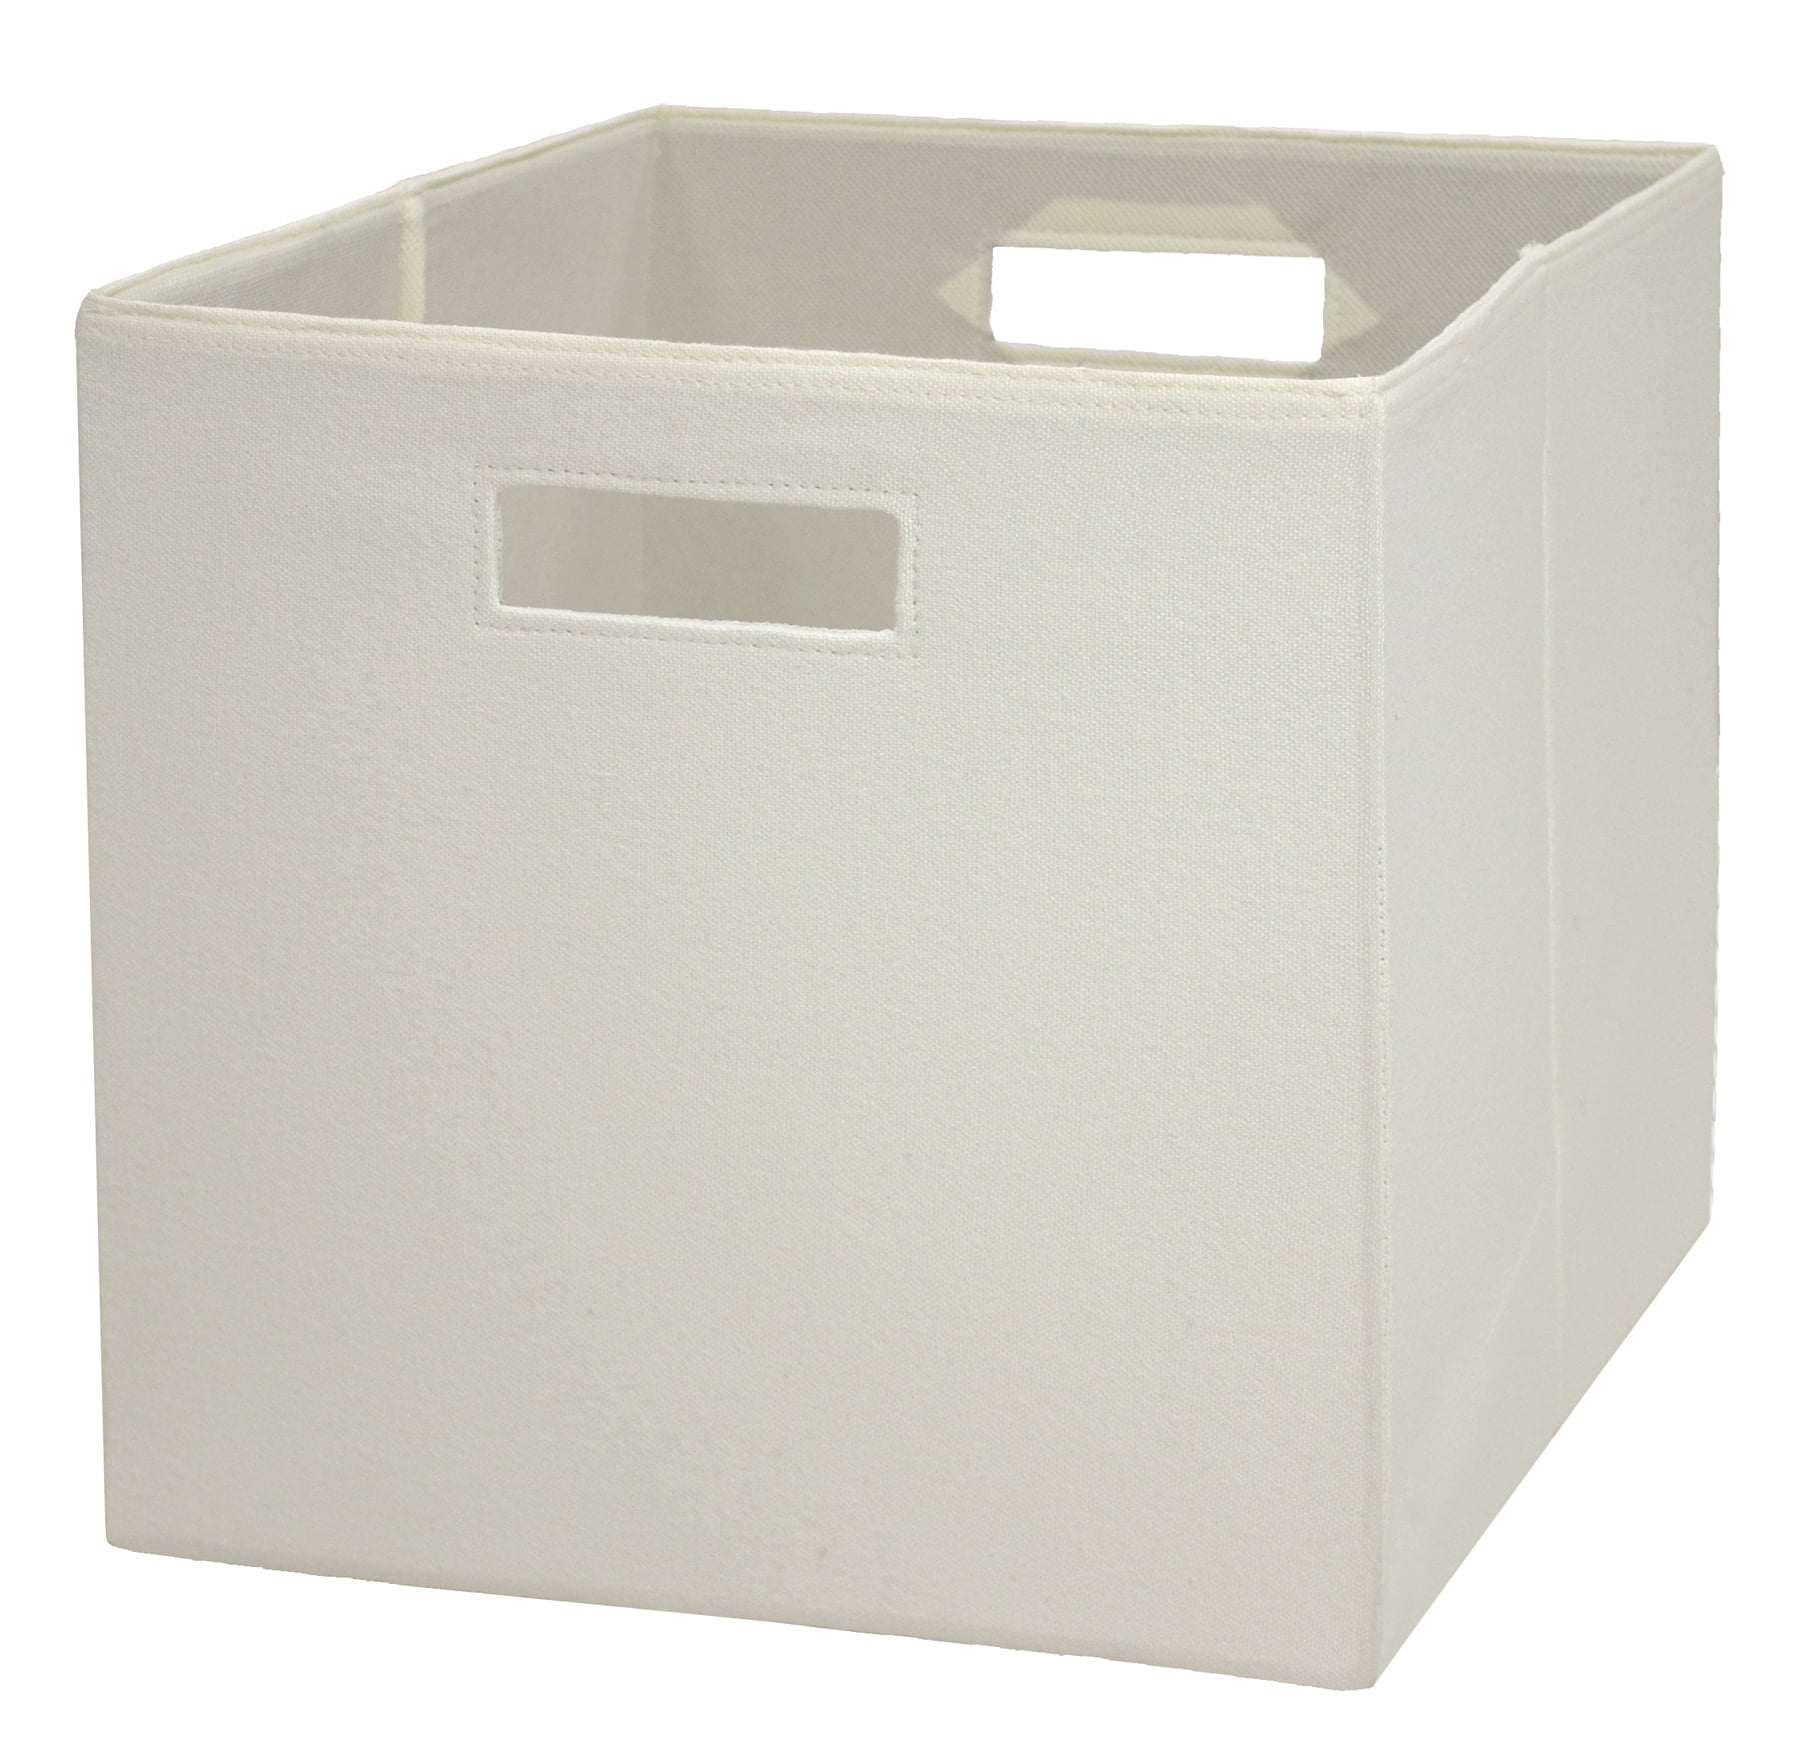 Better Homes & Gardens Fabric Cube Storage Bins (12.75 inch x 12.75 inch), Set of 2, Black Stripe